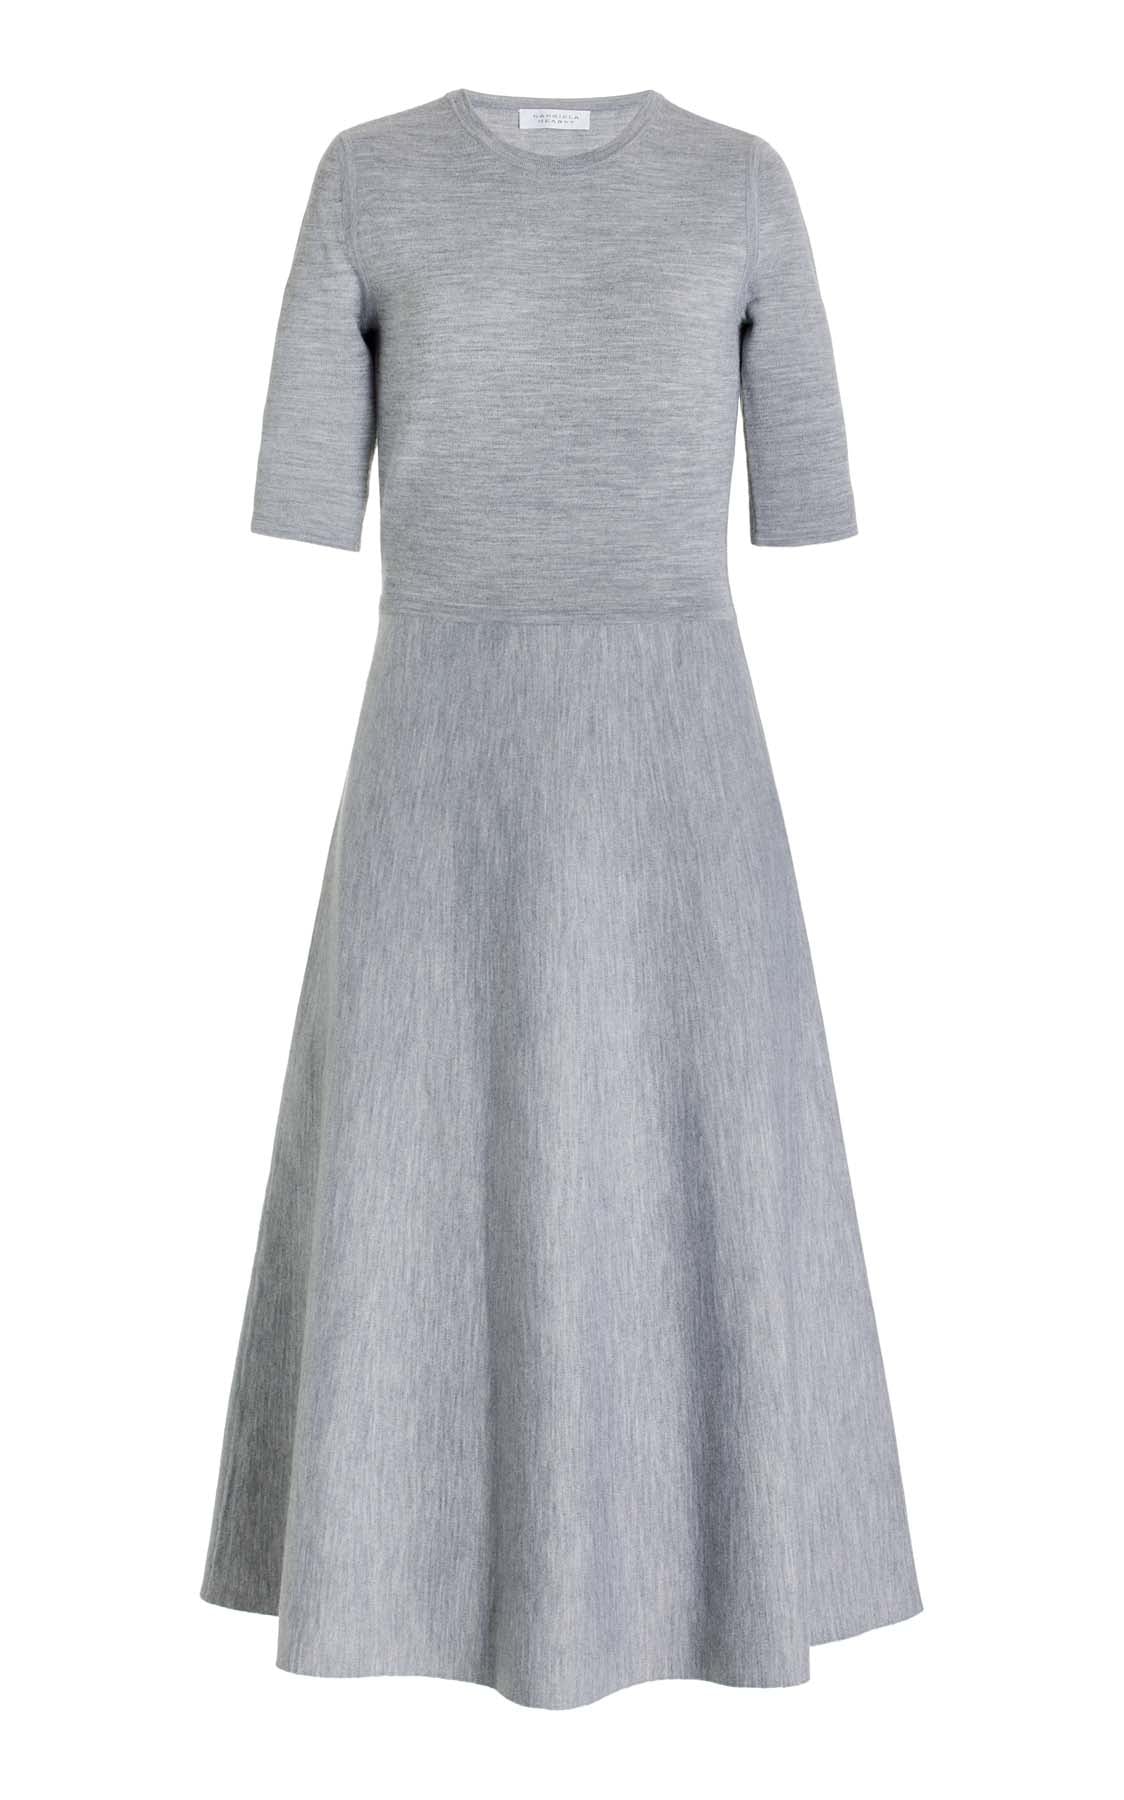 Seymore Knit Dress in Heather Grey Merino Wool Cashmere